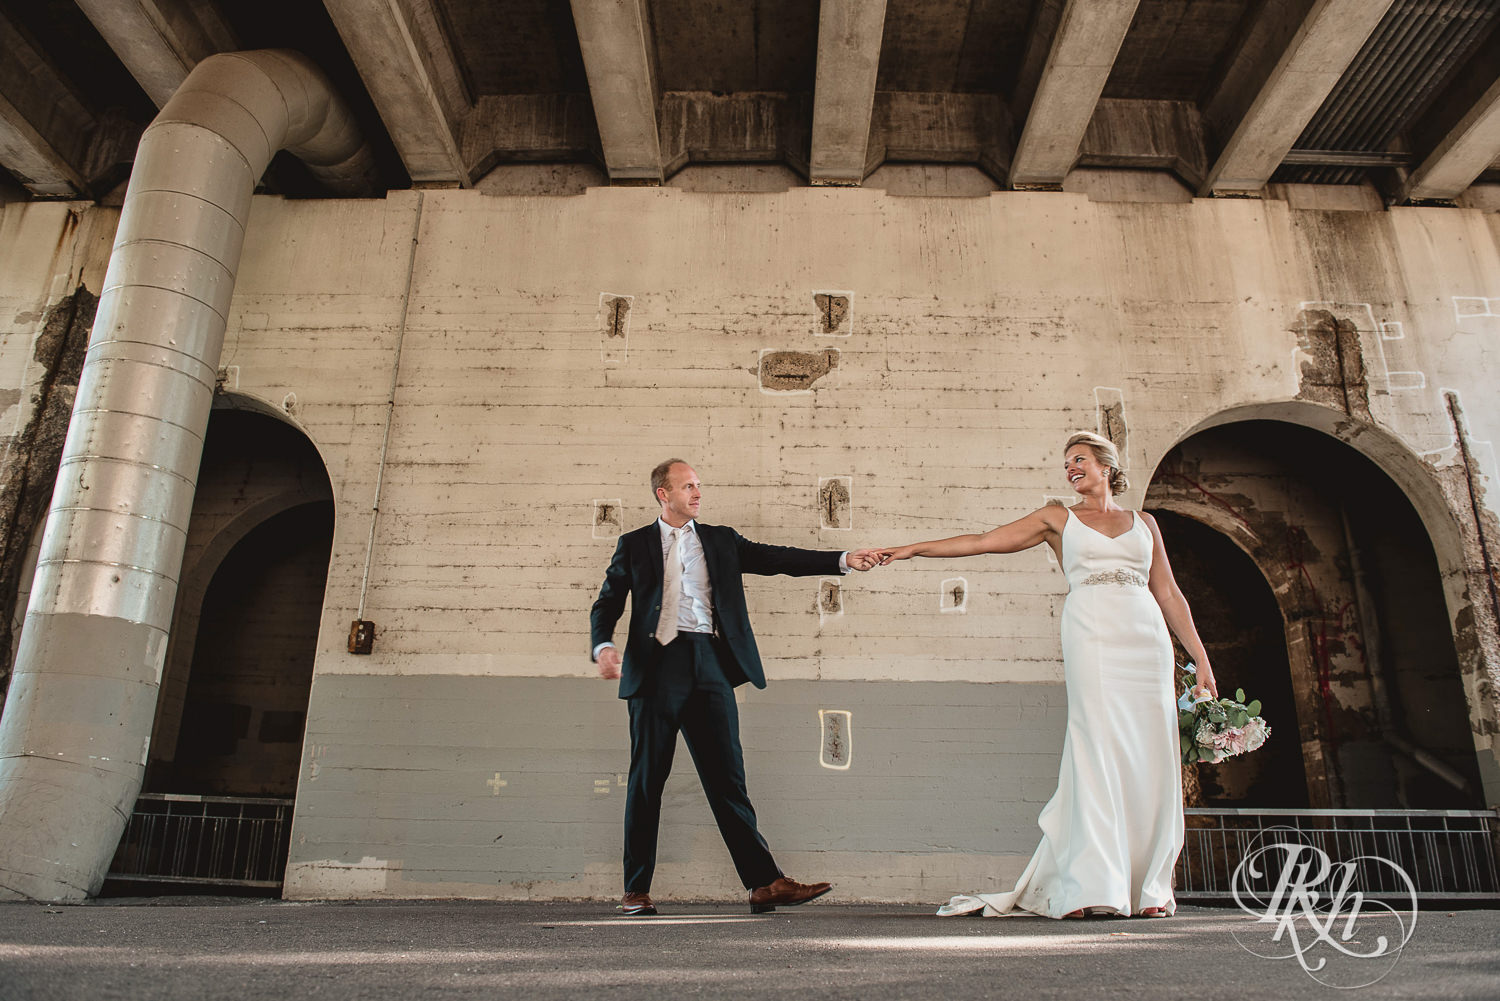 Bride and groom dance under a bridge on their wedding day in Minneapolis, Minnesota.